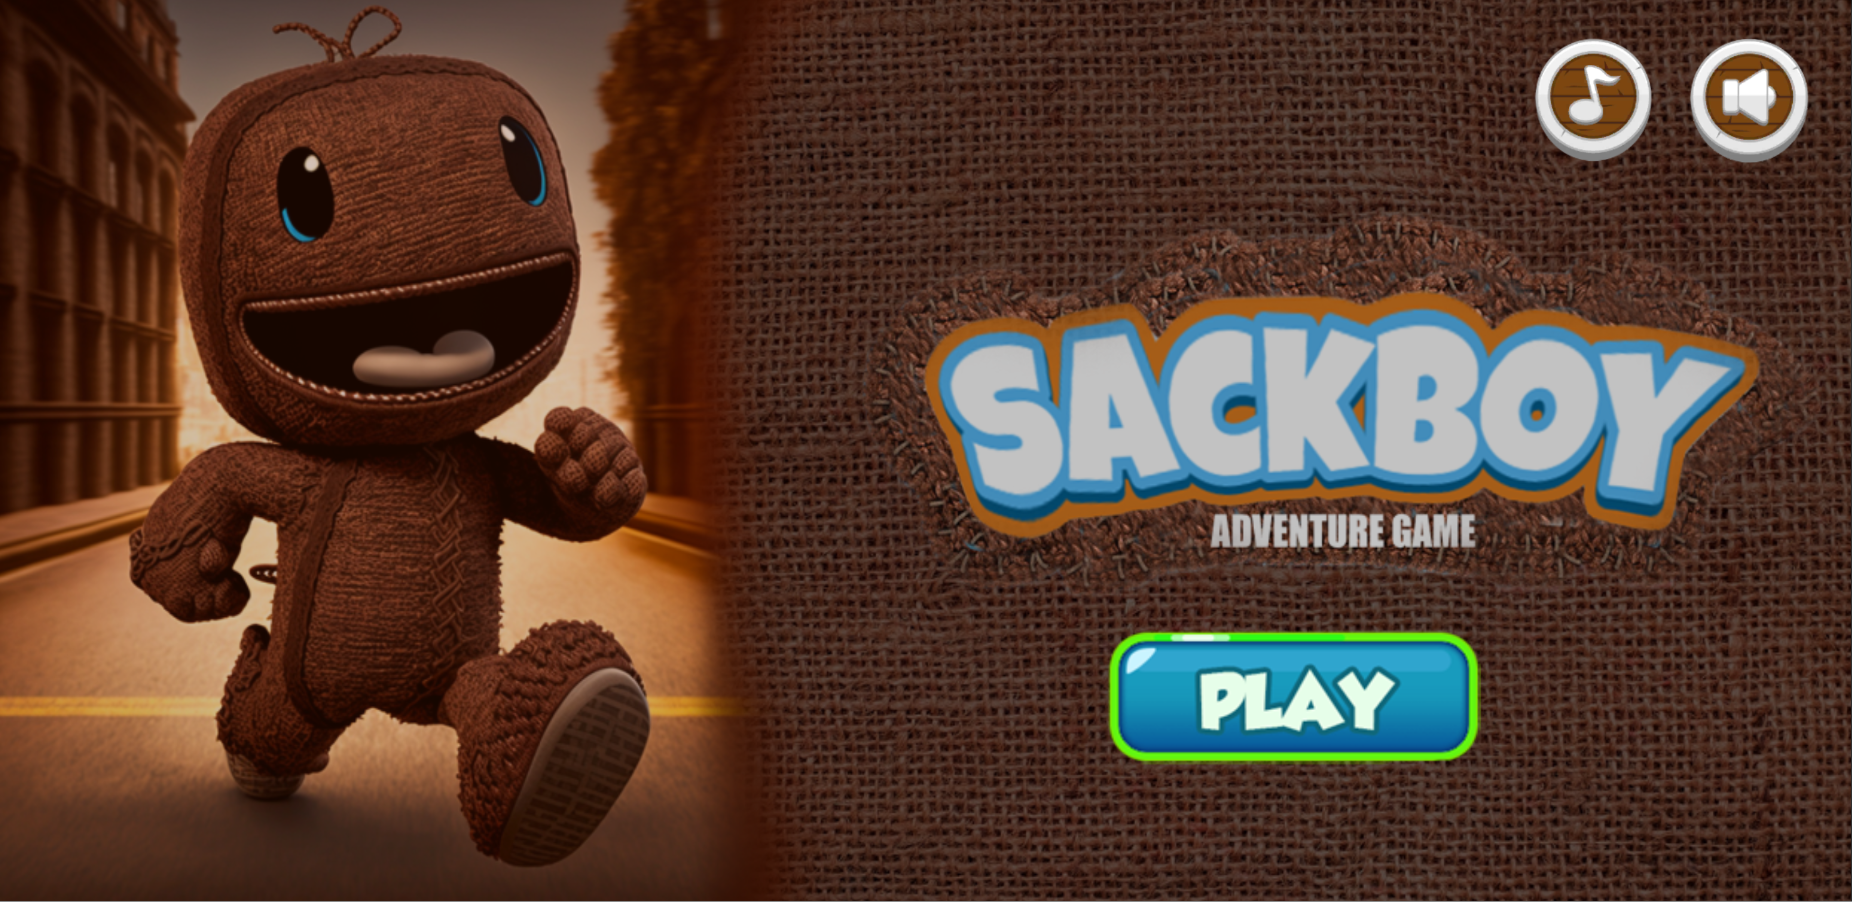 Screenshot 1 of jogo de aventura Sackboy 1.0